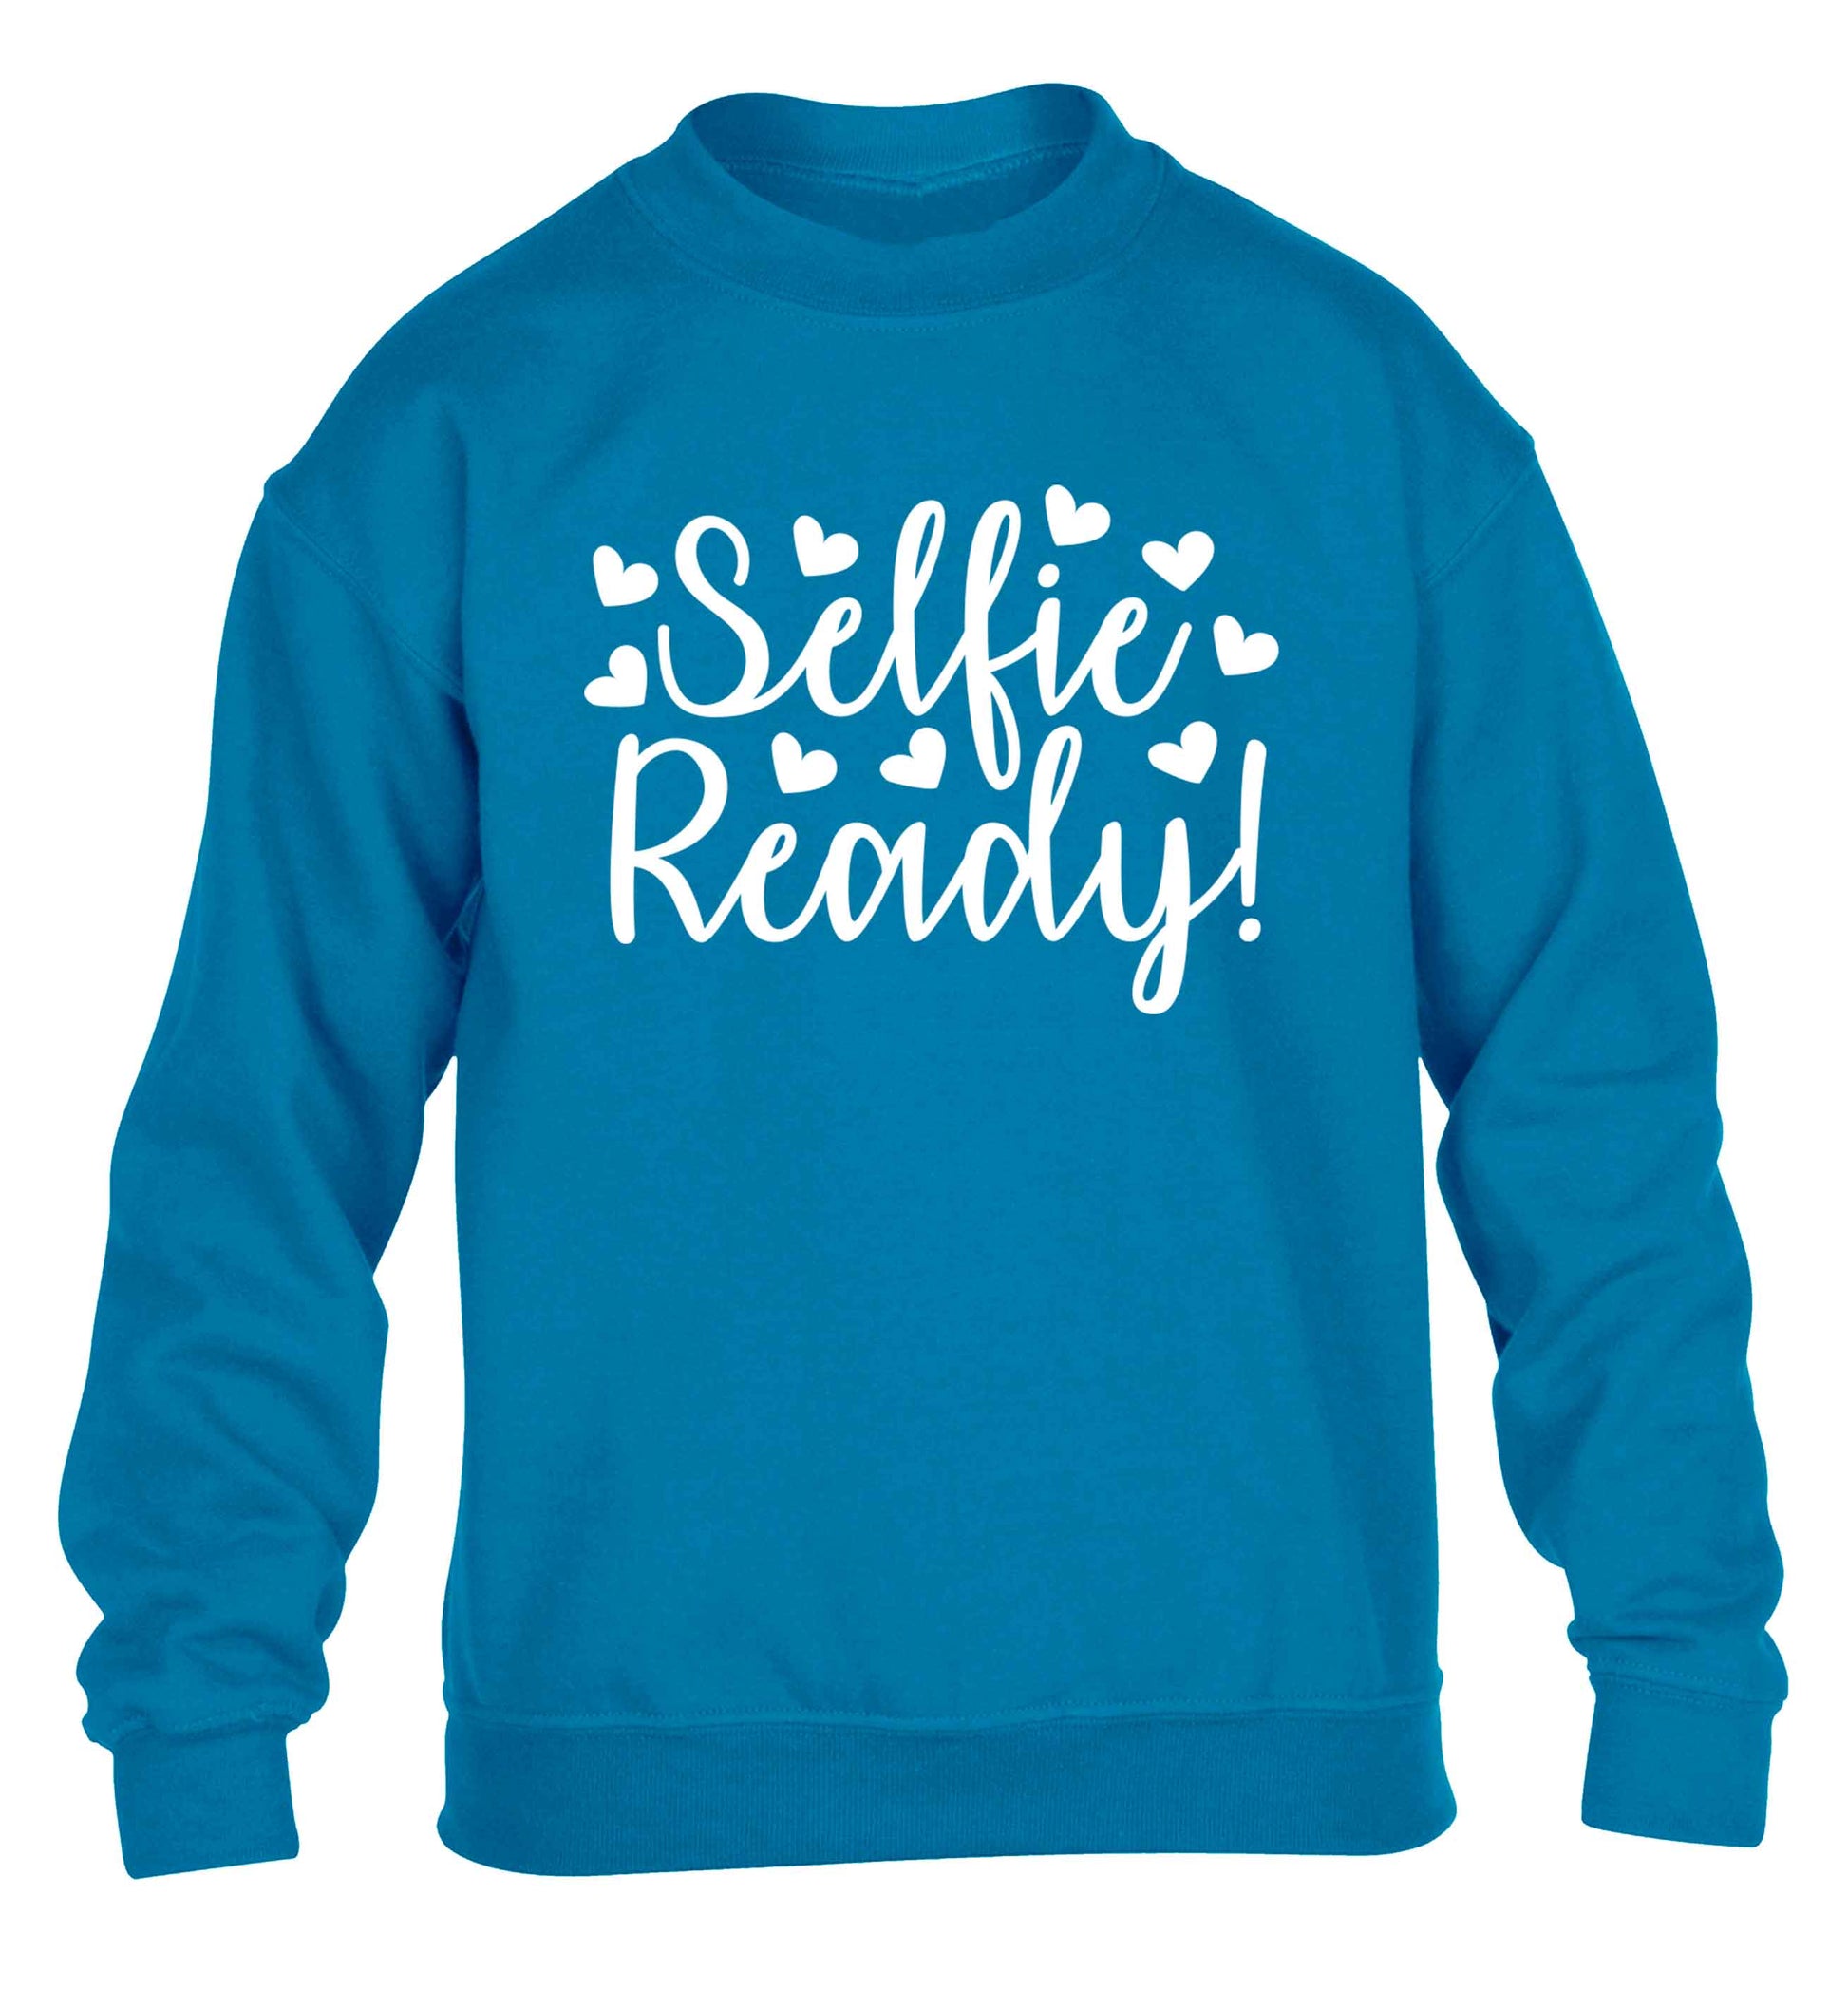 Selfie ready children's blue sweater 12-13 Years